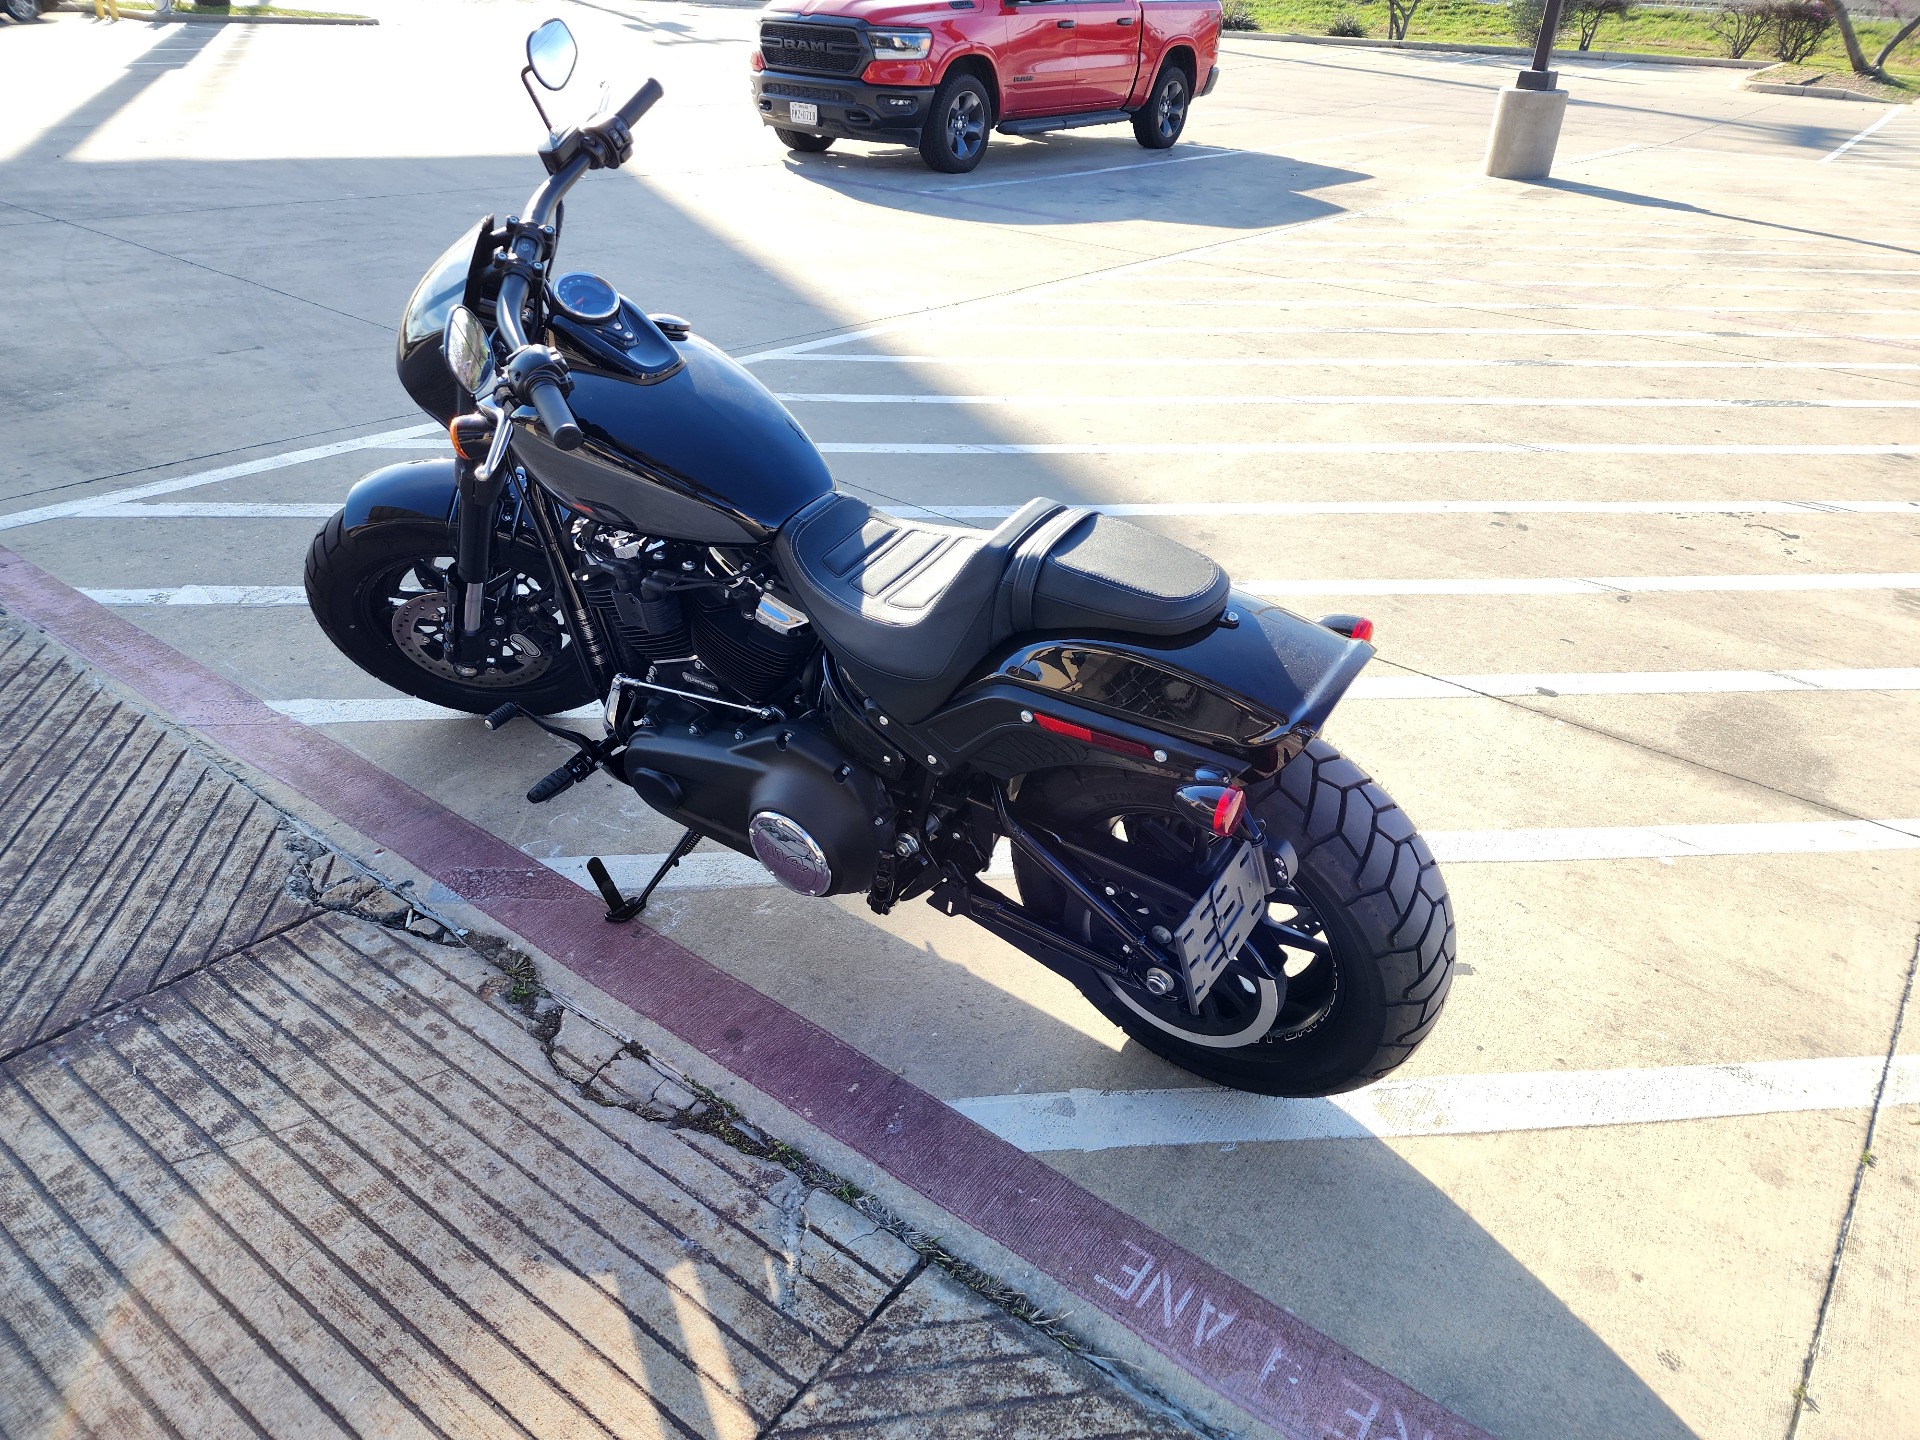 2022 Harley-Davidson Fat Bob® 114 in San Antonio, Texas - Photo 6